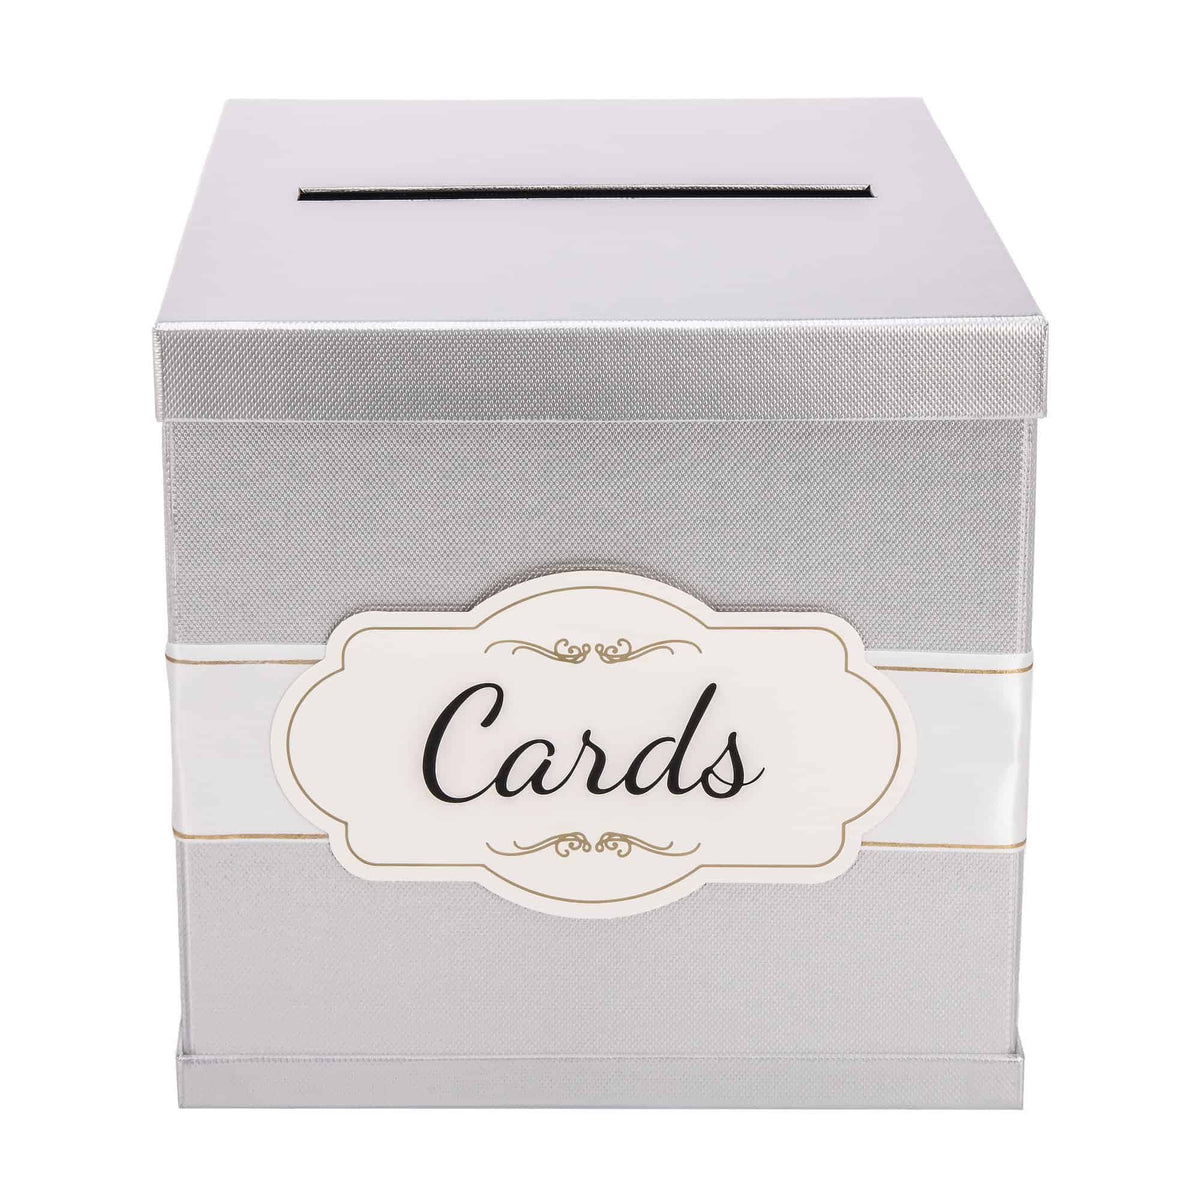 Cardboard Black and White Wedding Card Box